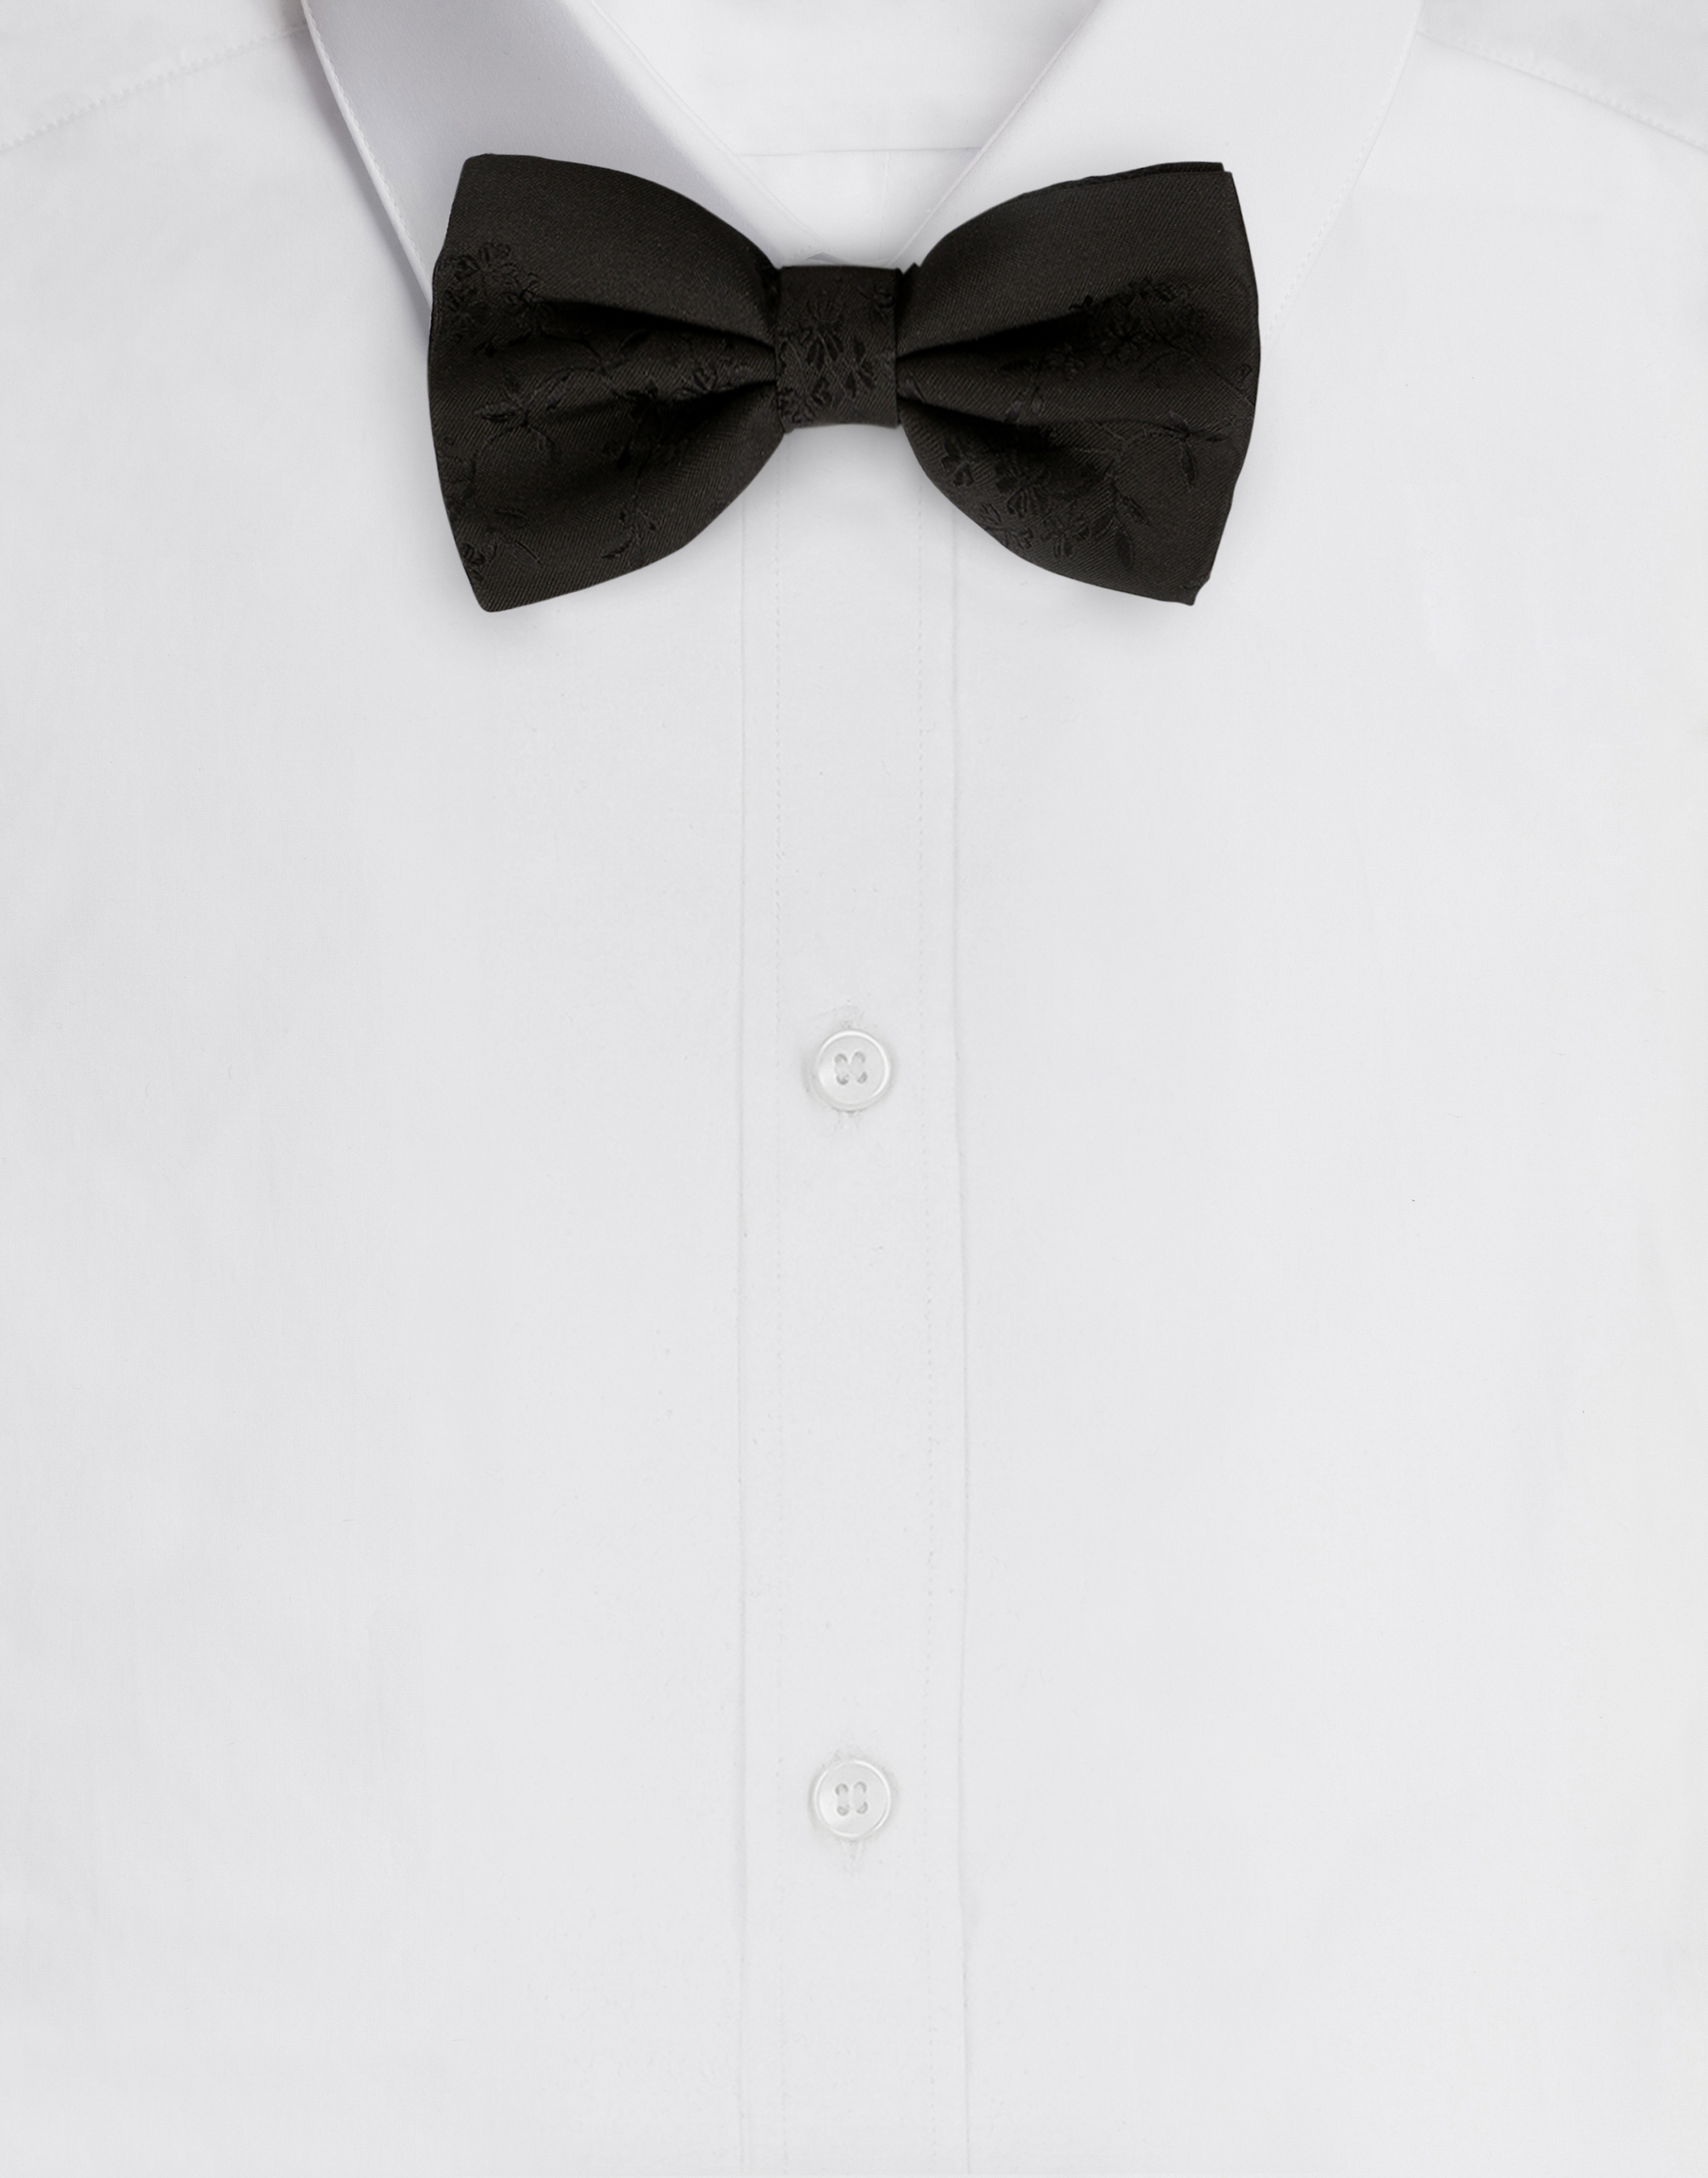 Tie-print silk jacquard bow tie in Black